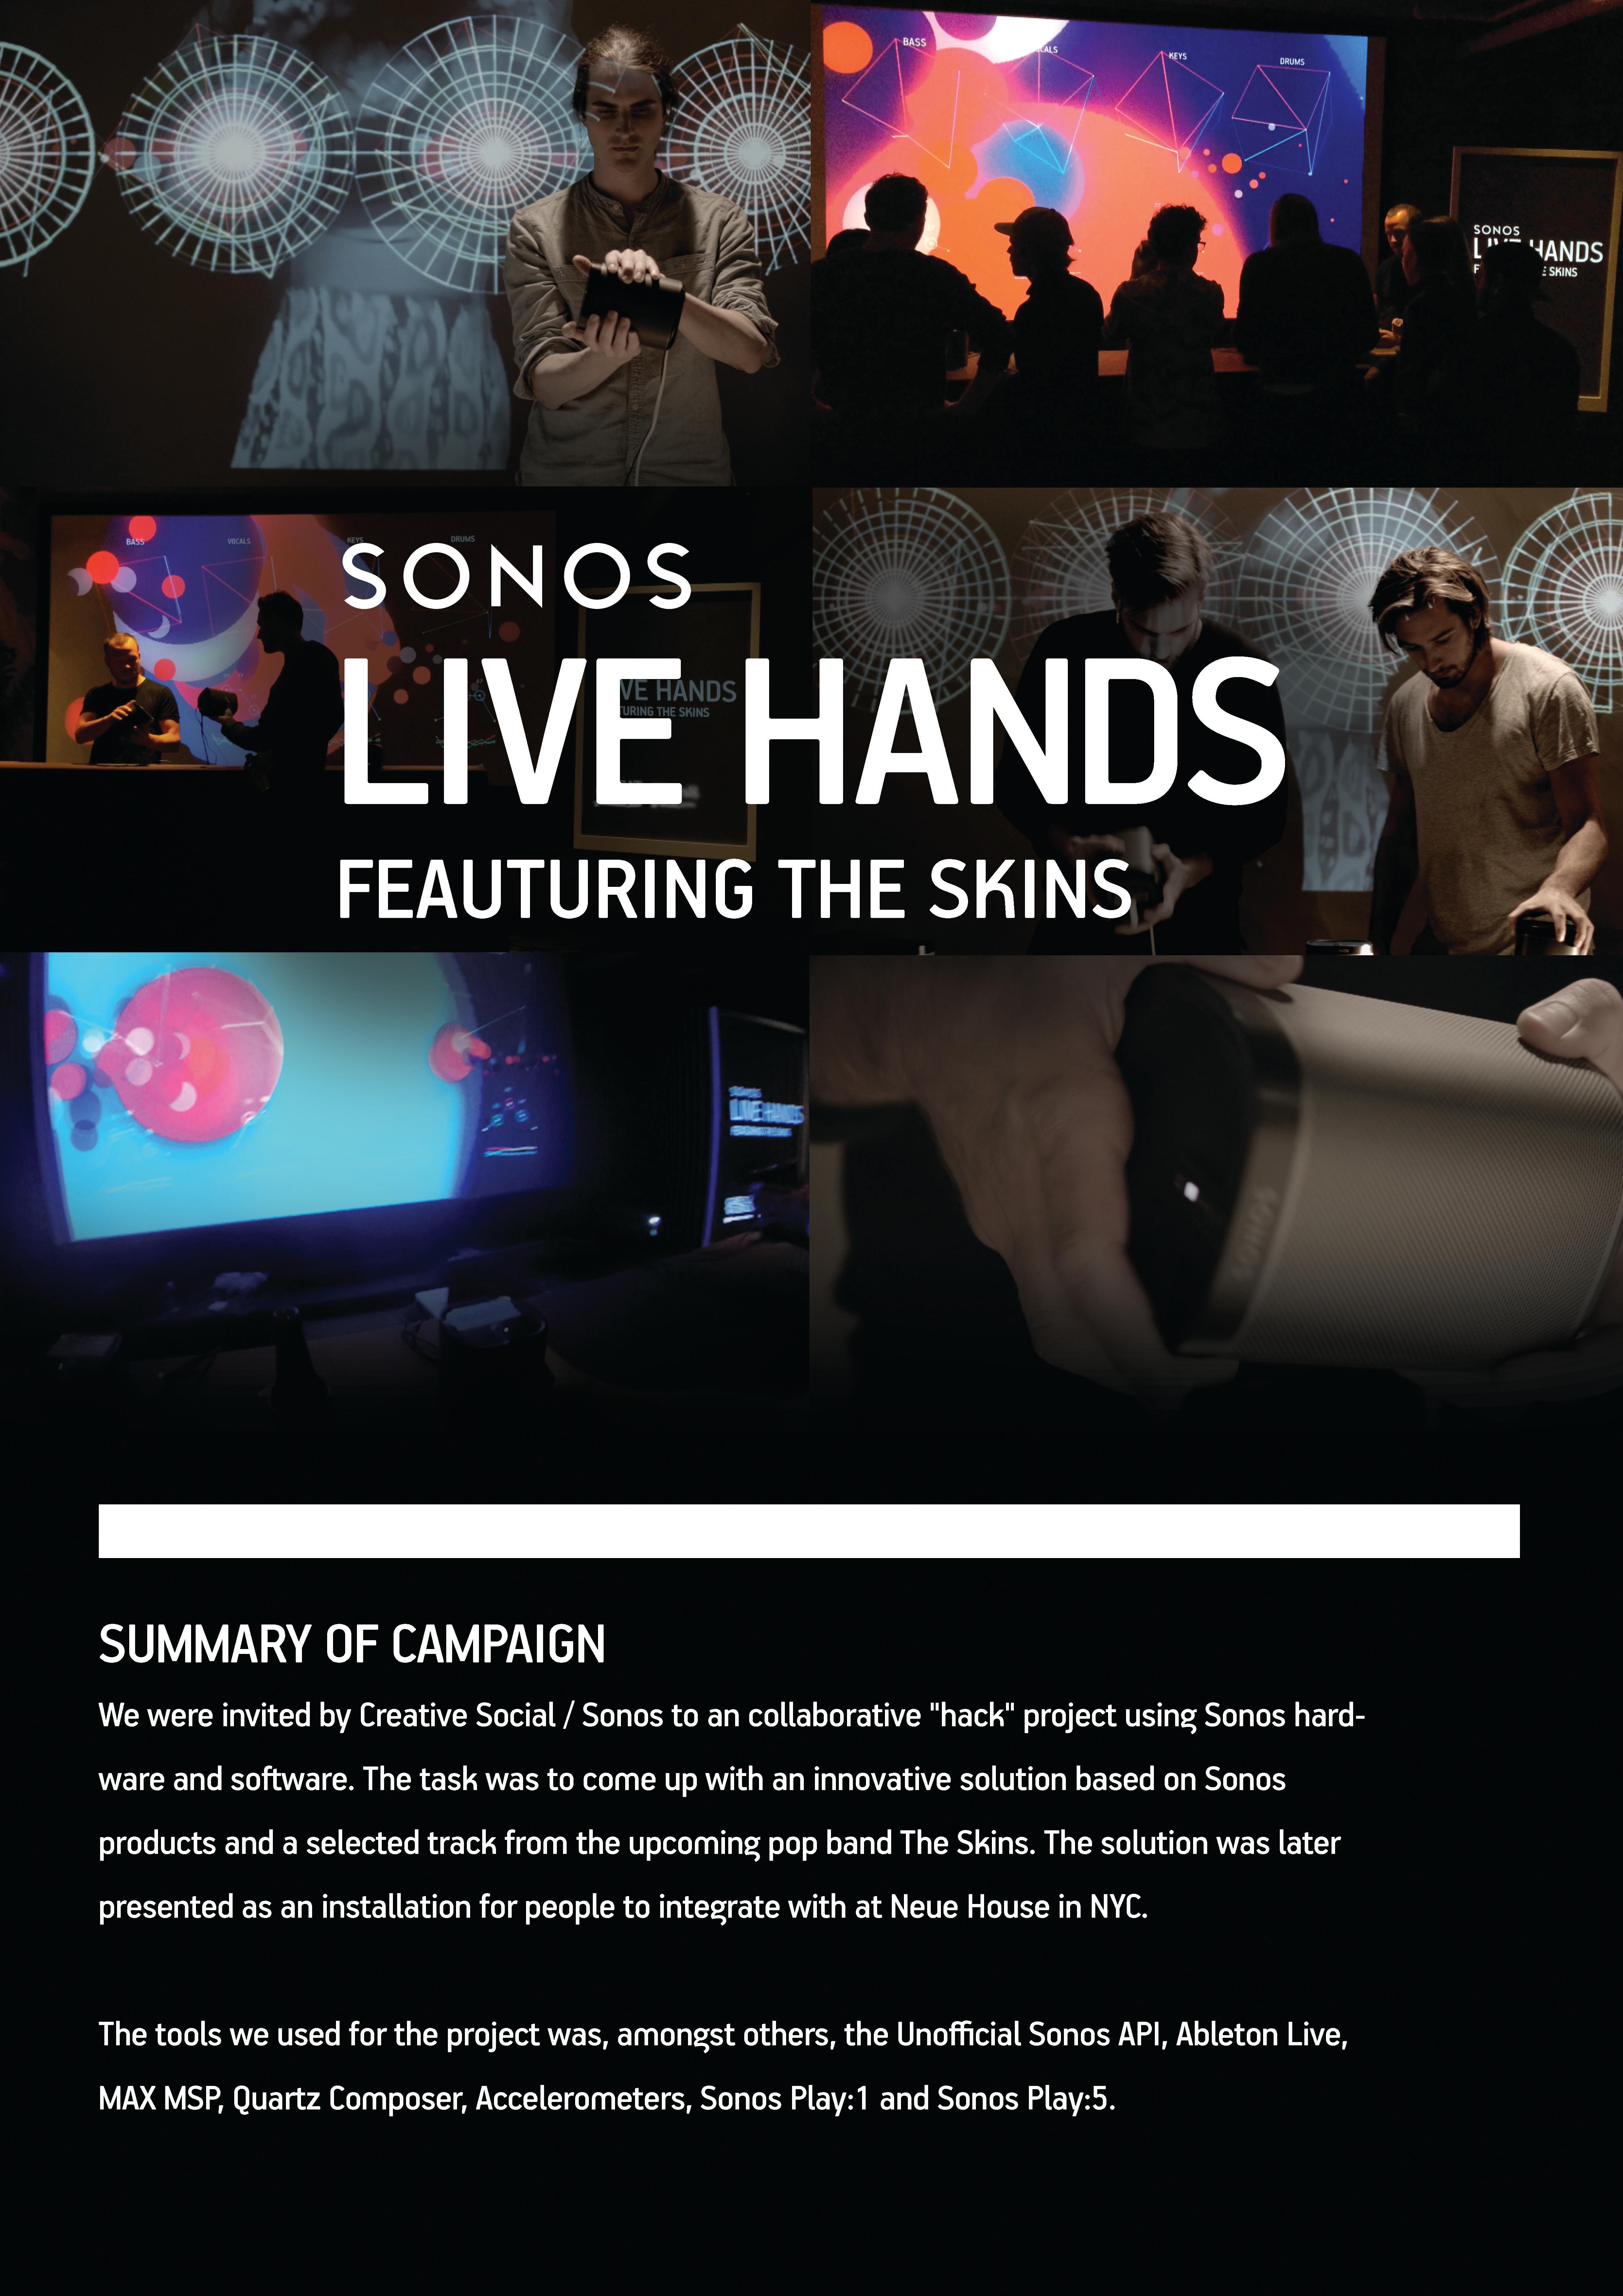 SONOS LIVE HANDS